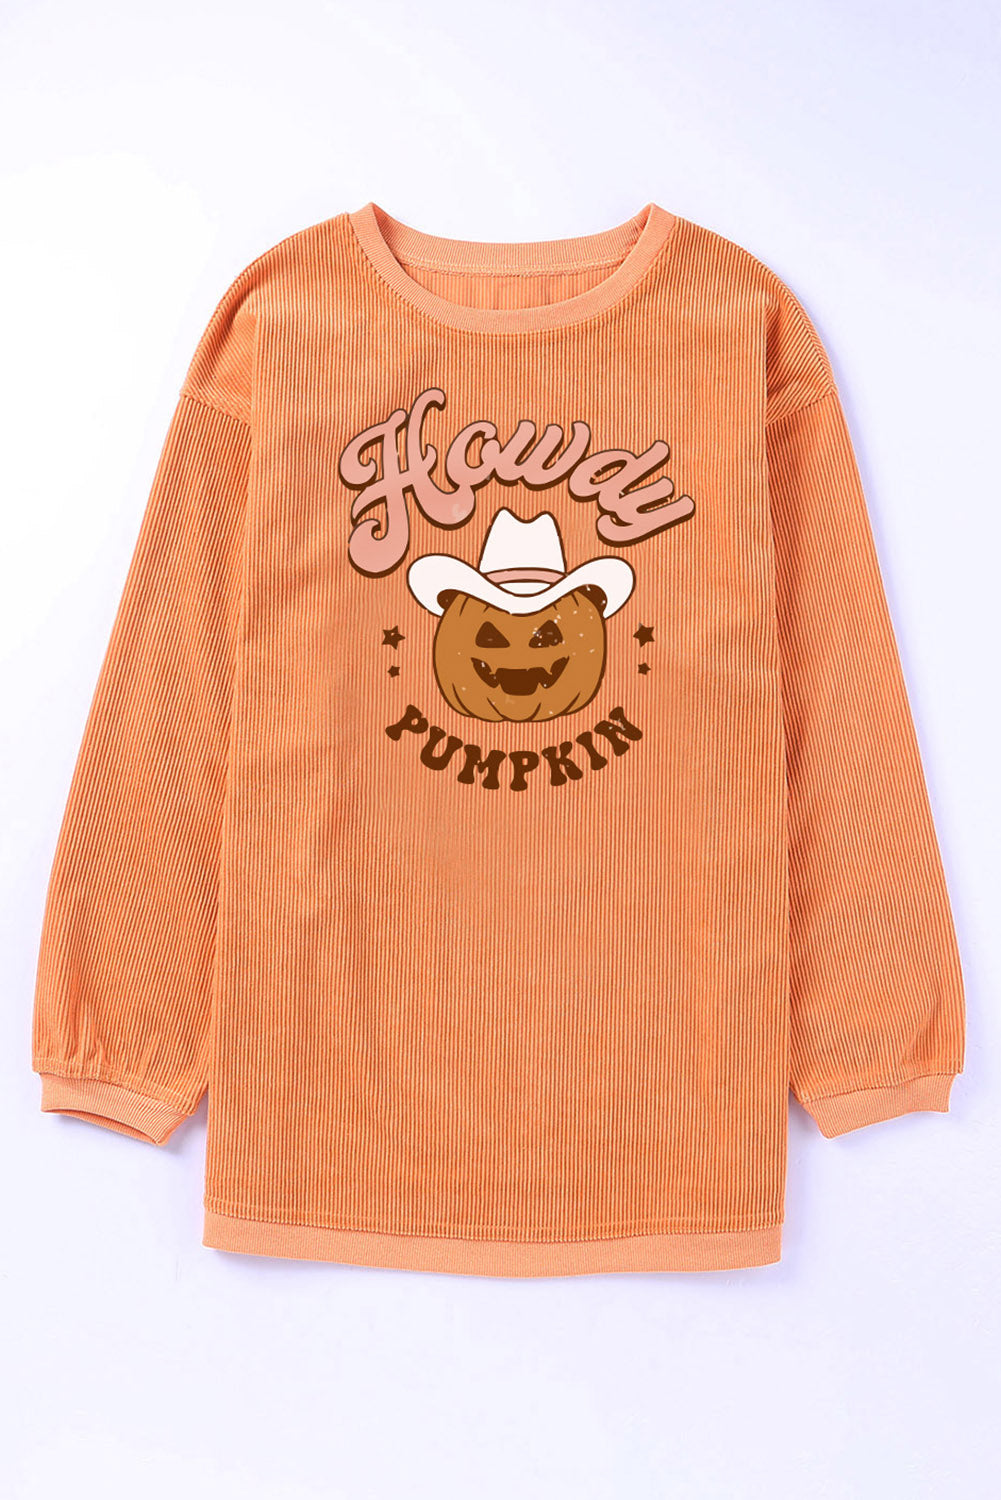 Howdy Pumpkin Graphic Sweatshirt - Cheeky Chic Boutique